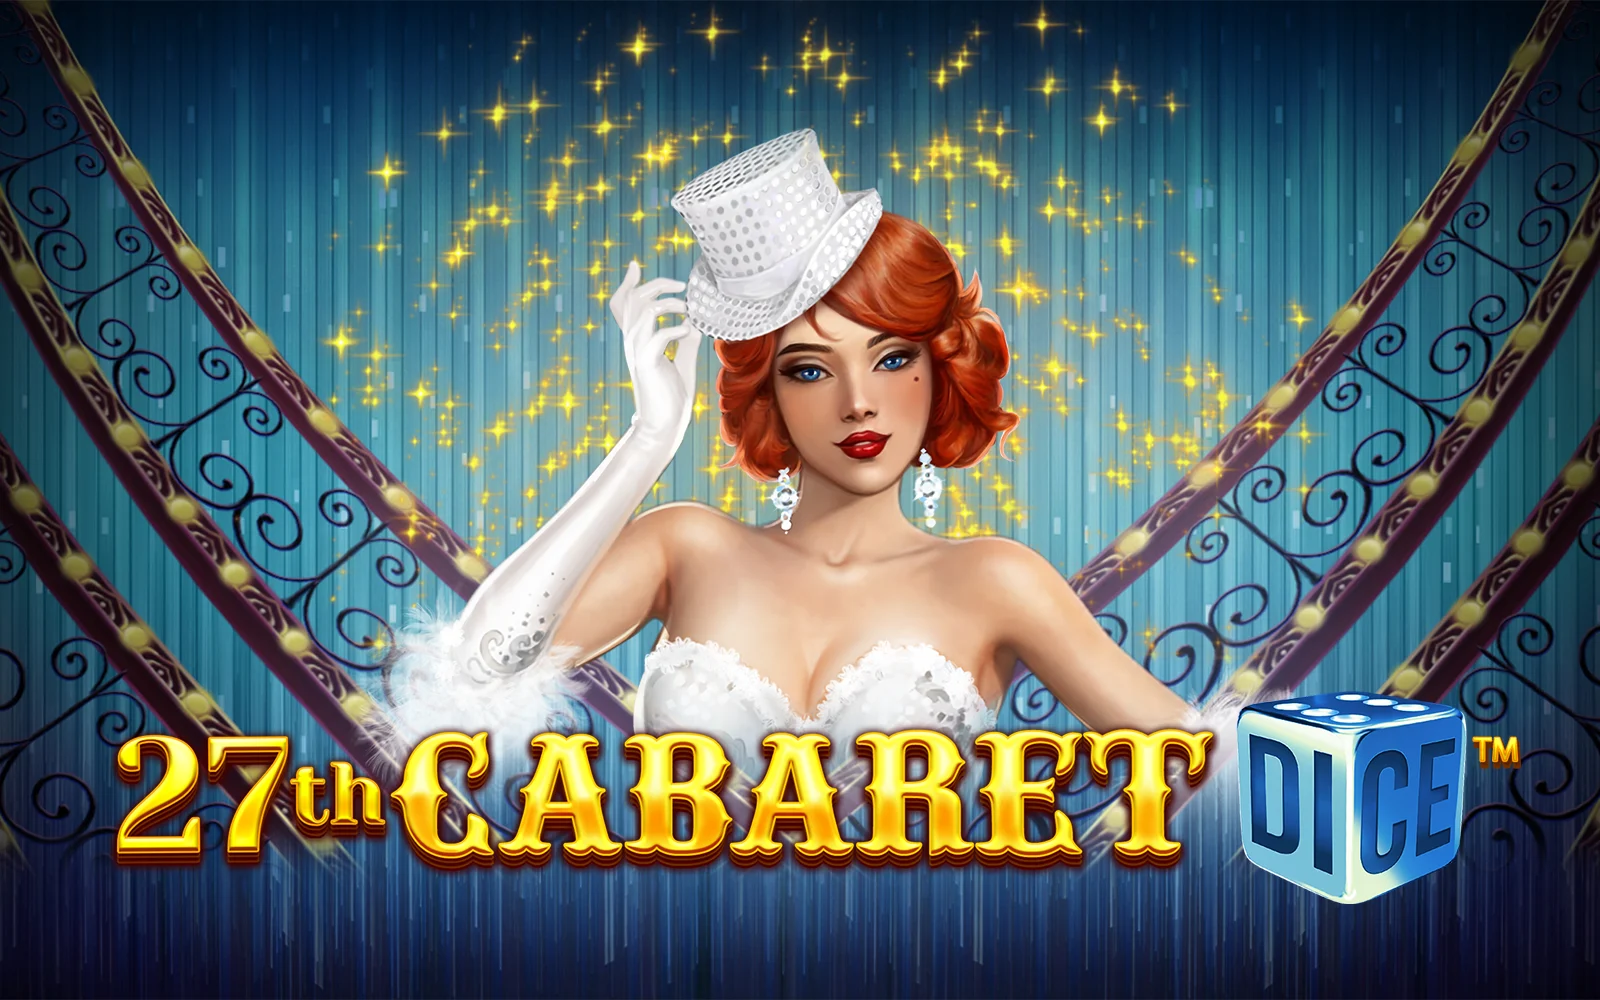 Juega a 27th Cabaret Dice en el casino en línea de Starcasino.be